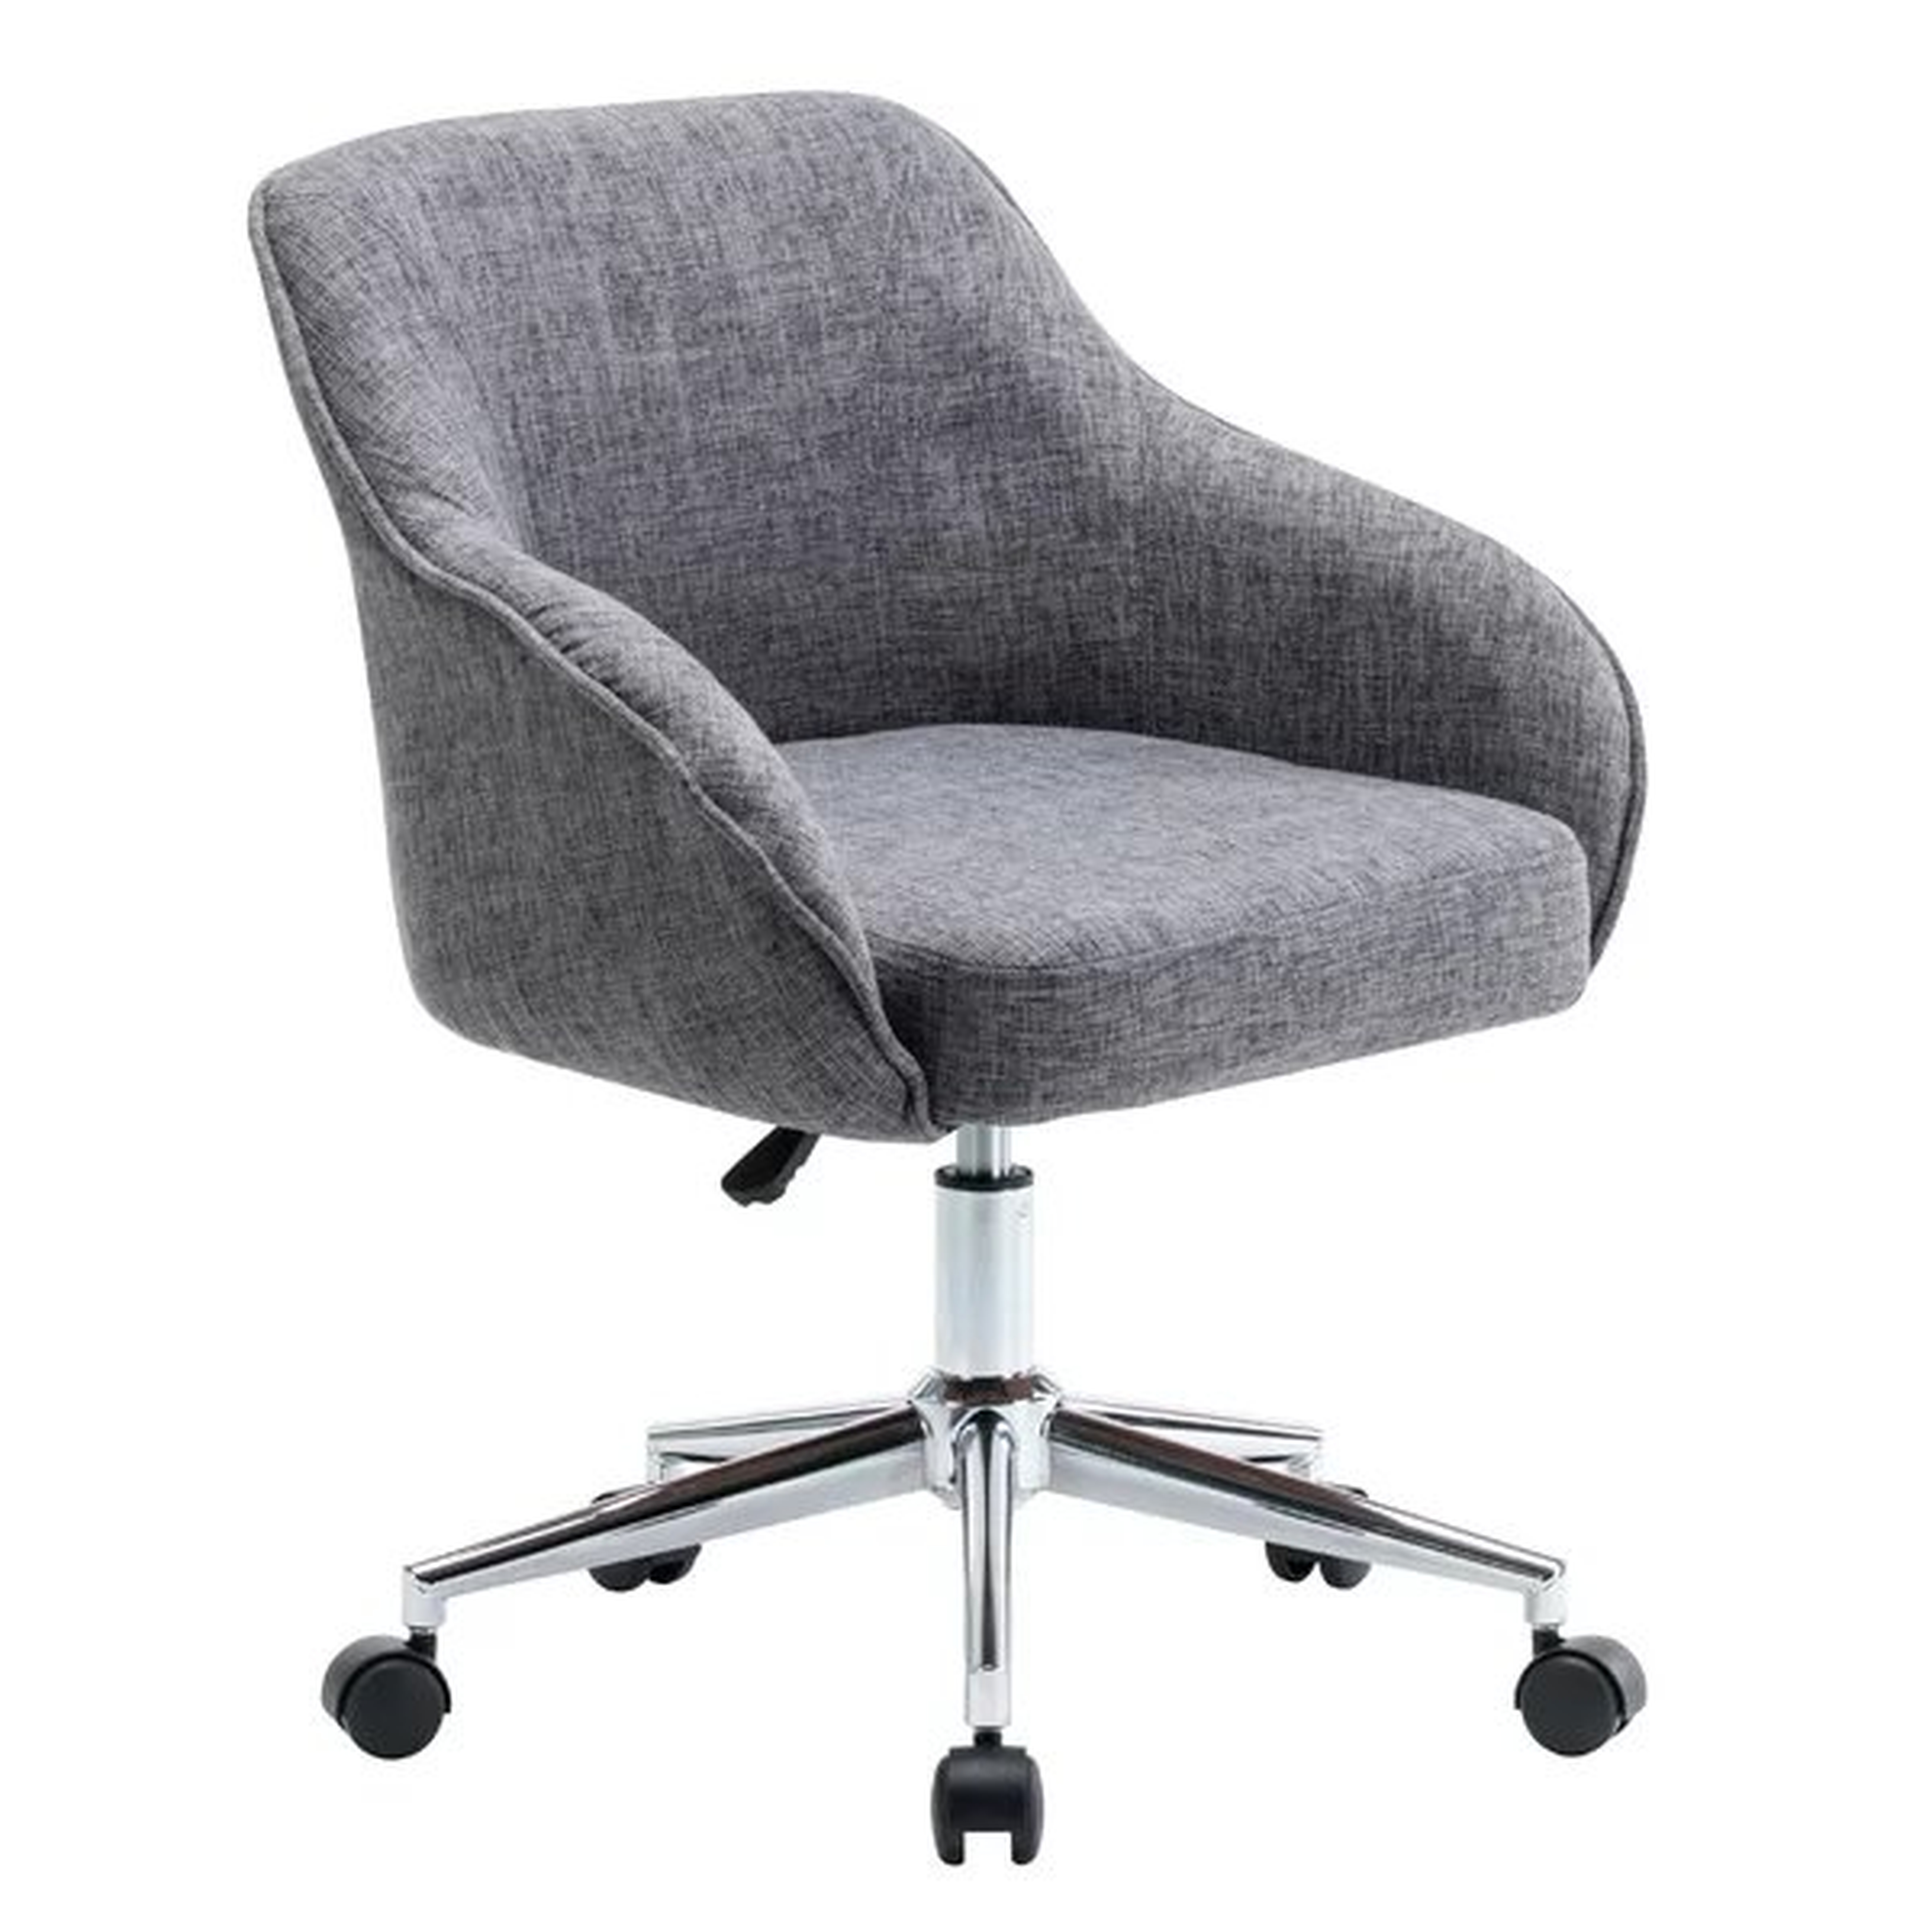 Seppich Adjustable Height Upholstered Swivel Office Chair - AllModern